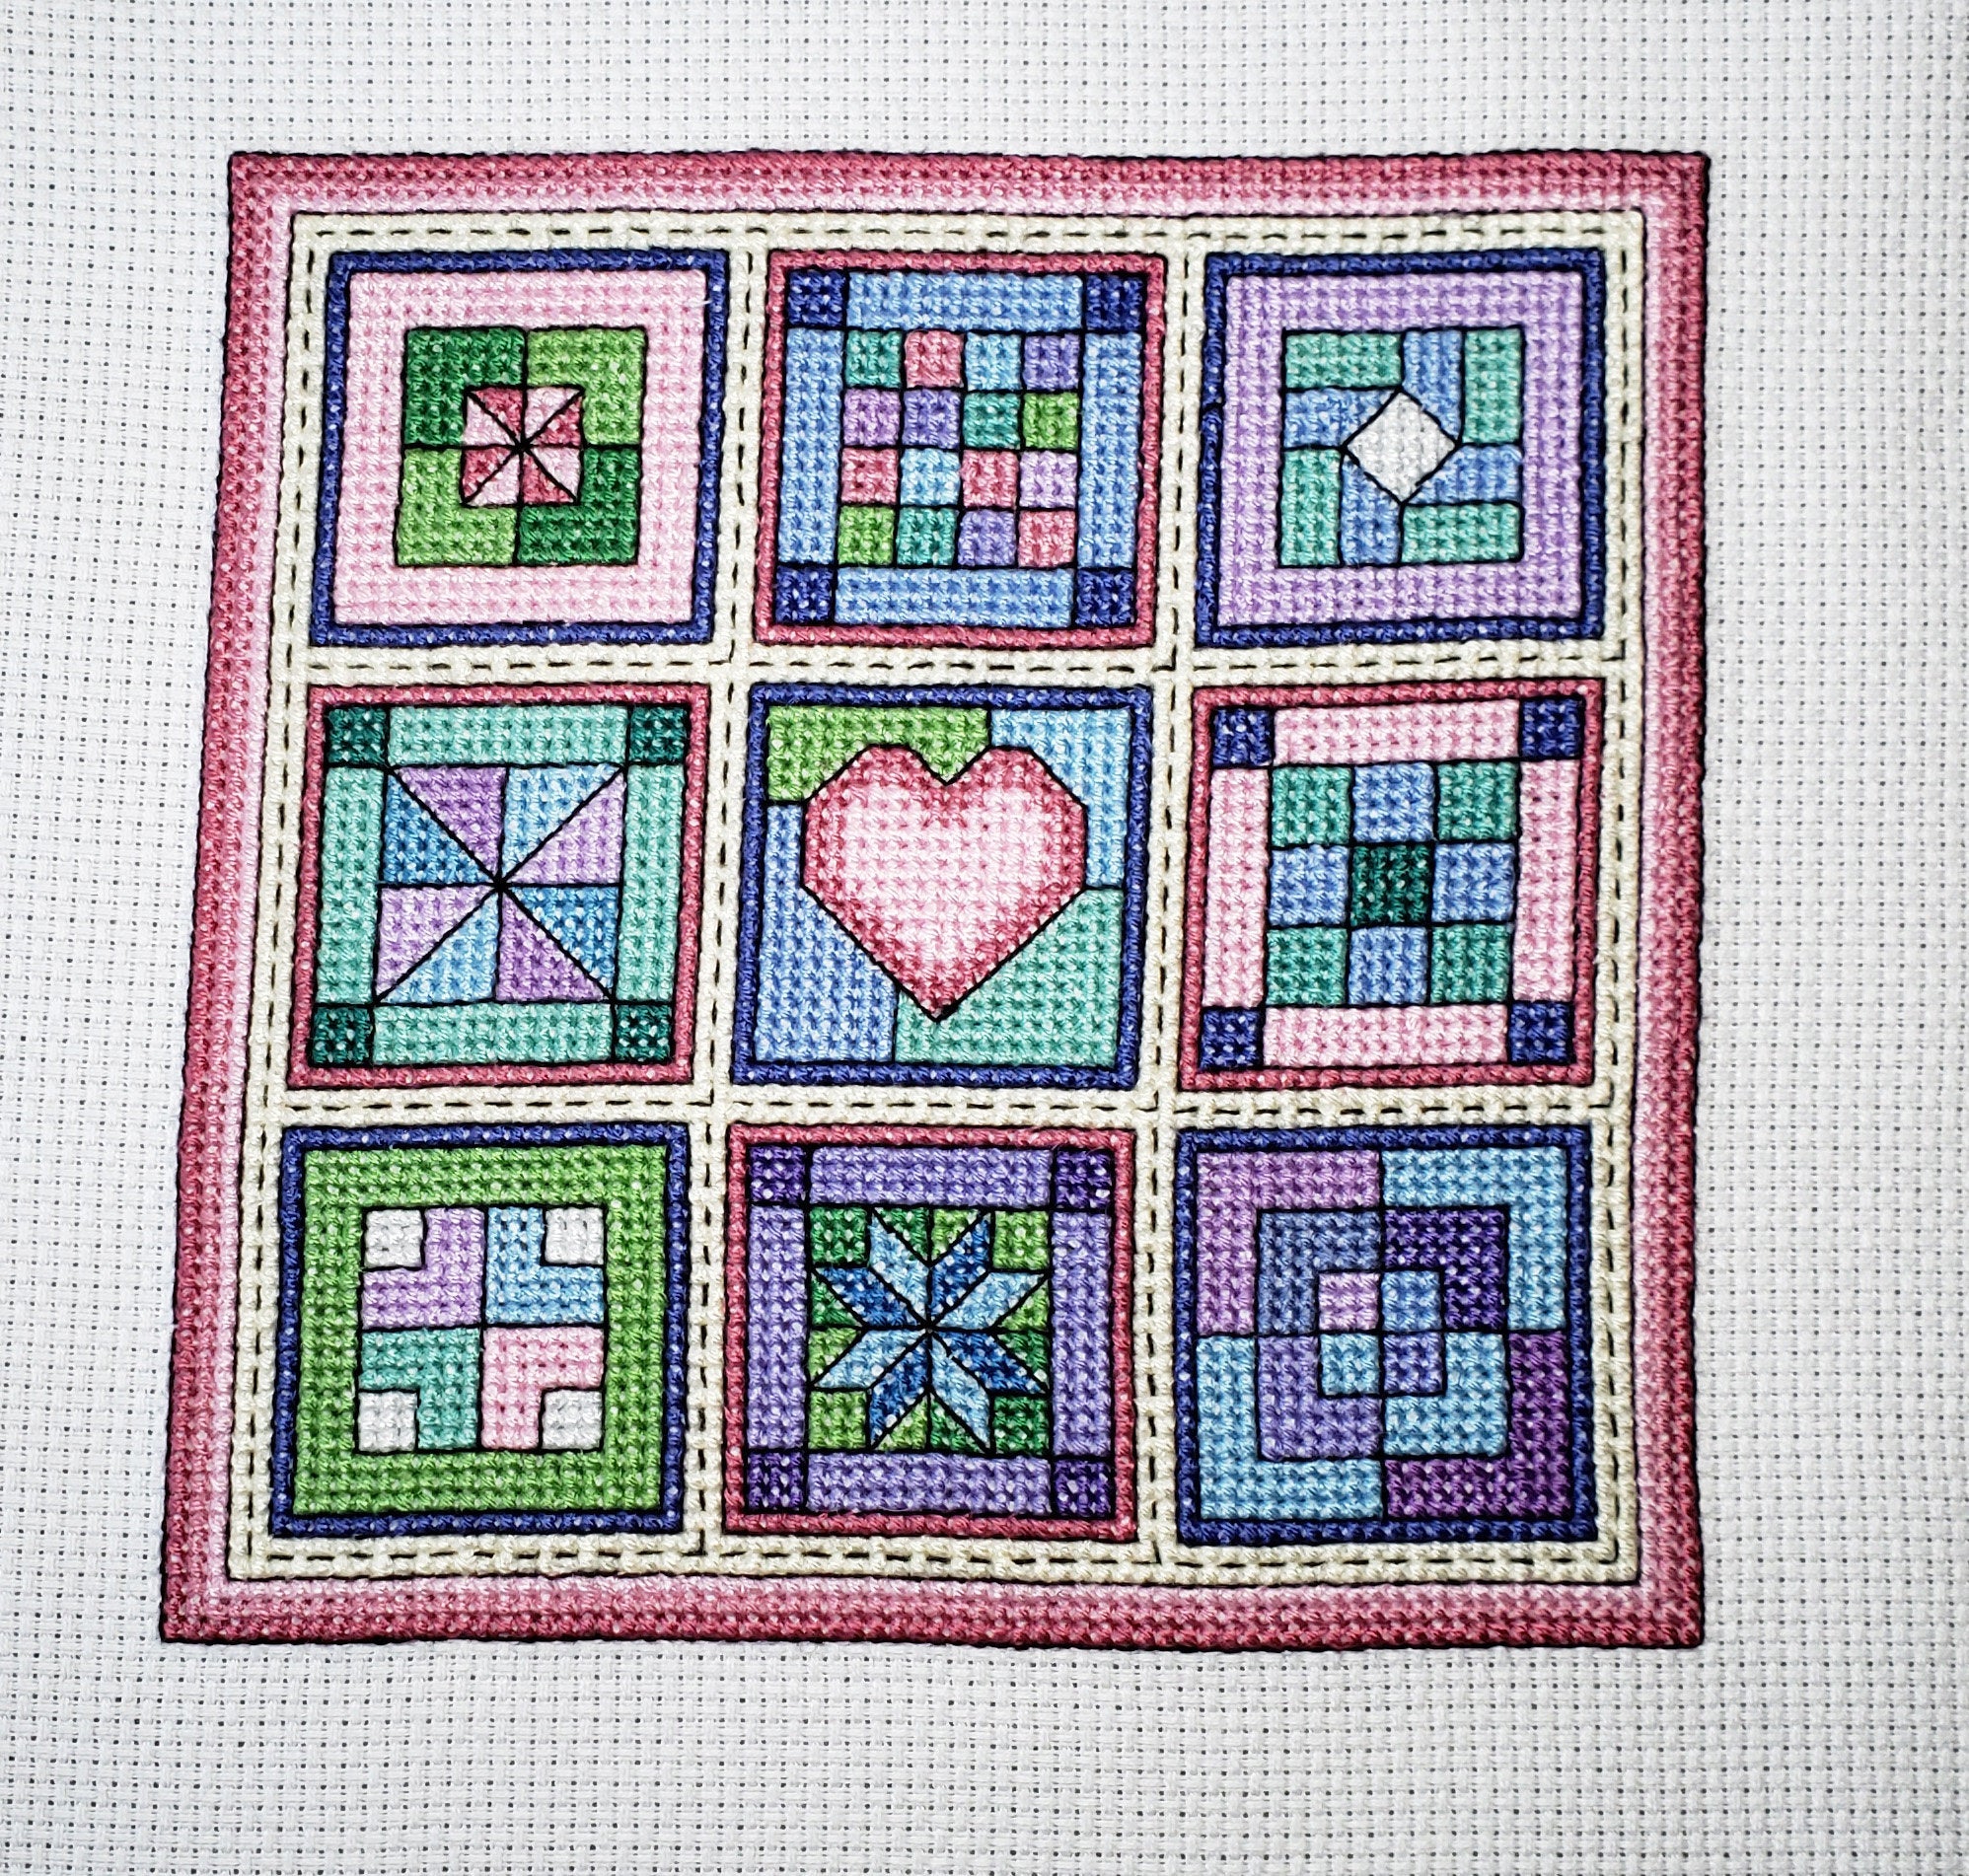 Cotton Candy / Quilt Blocks 10 - Cross Stitch Pattern